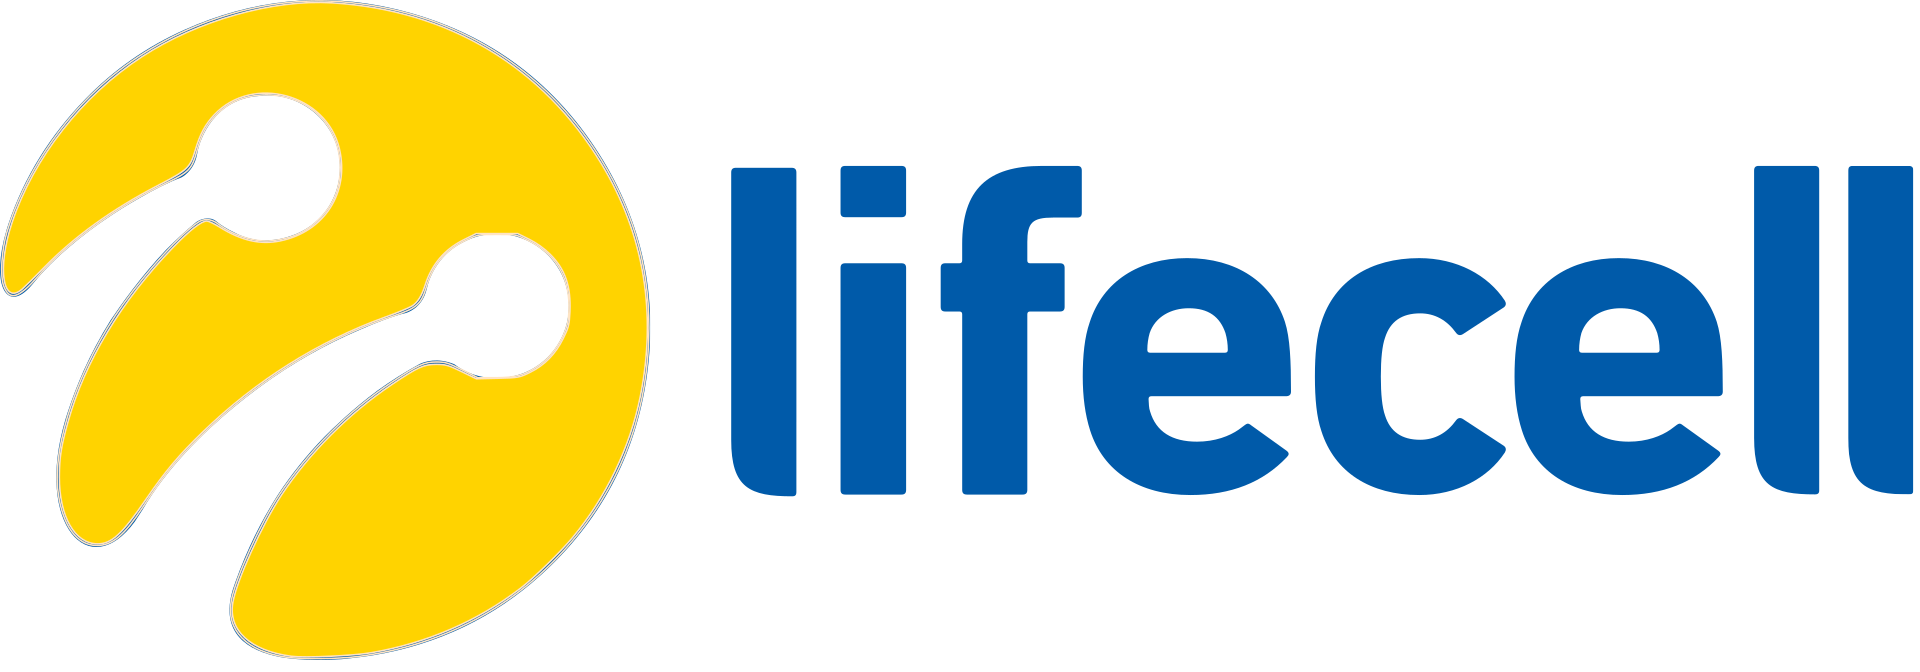 Turkcell - Lifecell - Лайфселл - life:) - Украинский оператор мобильной связи